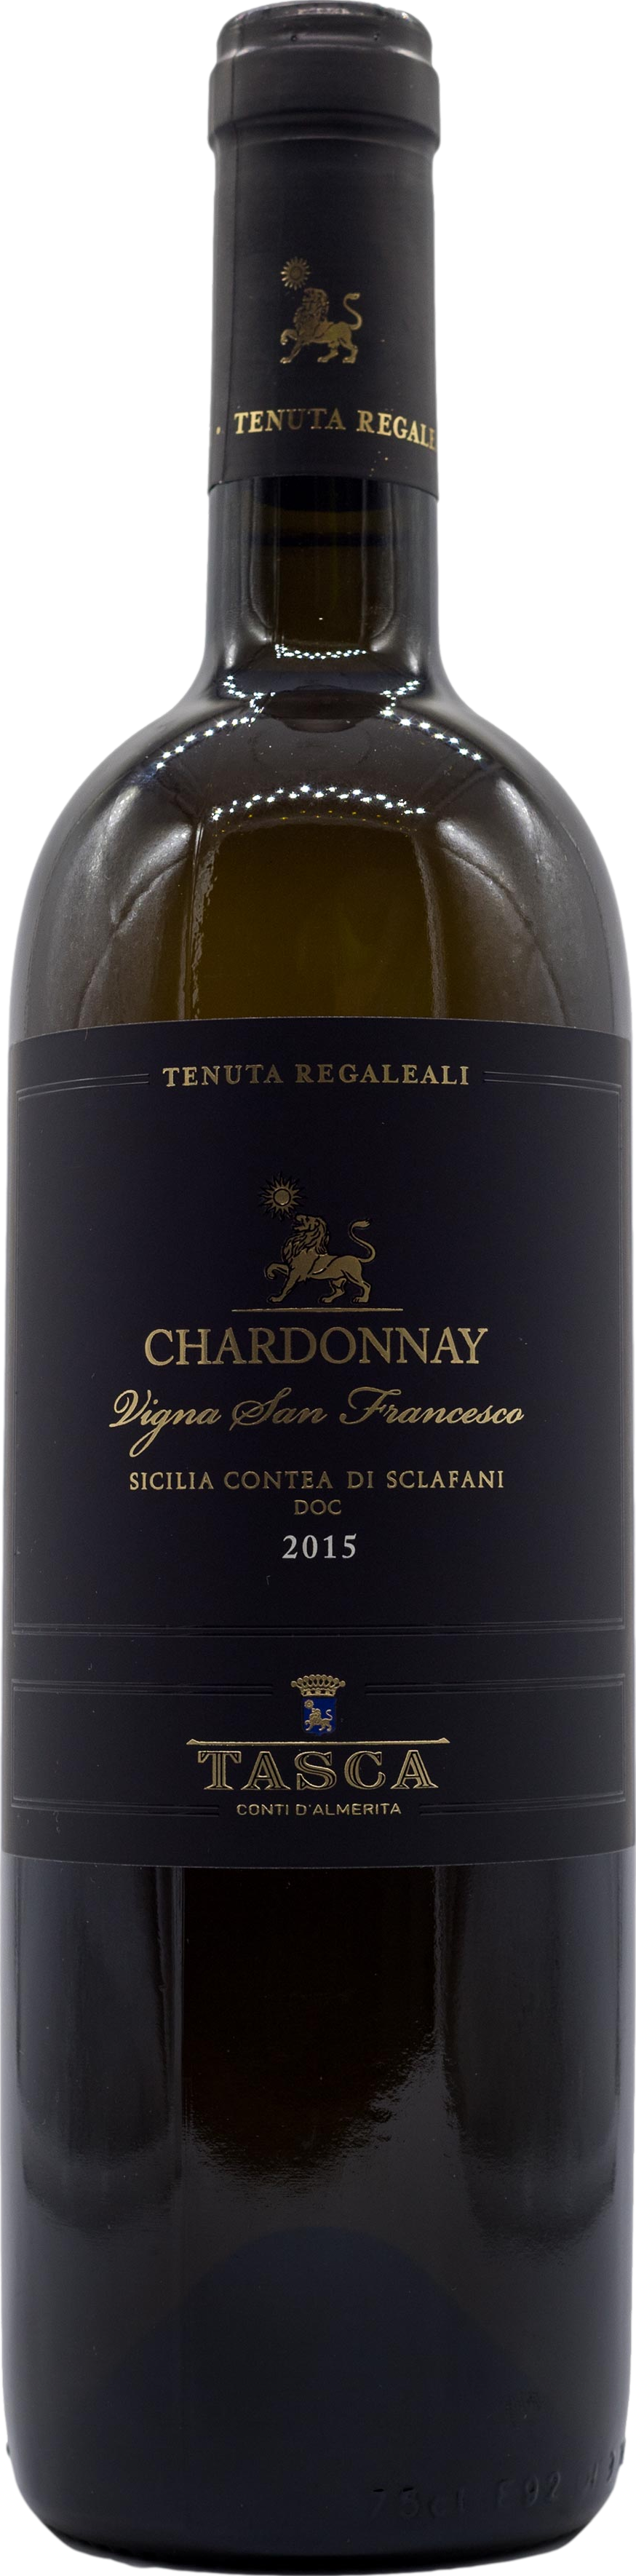 Tasca günstig Kaufen-Tasca d'Almerita Sicilia Tenuta Regaleali Chardonnay 2019. Tasca d'Almerita Sicilia Tenuta Regaleali Chardonnay 2019 . 